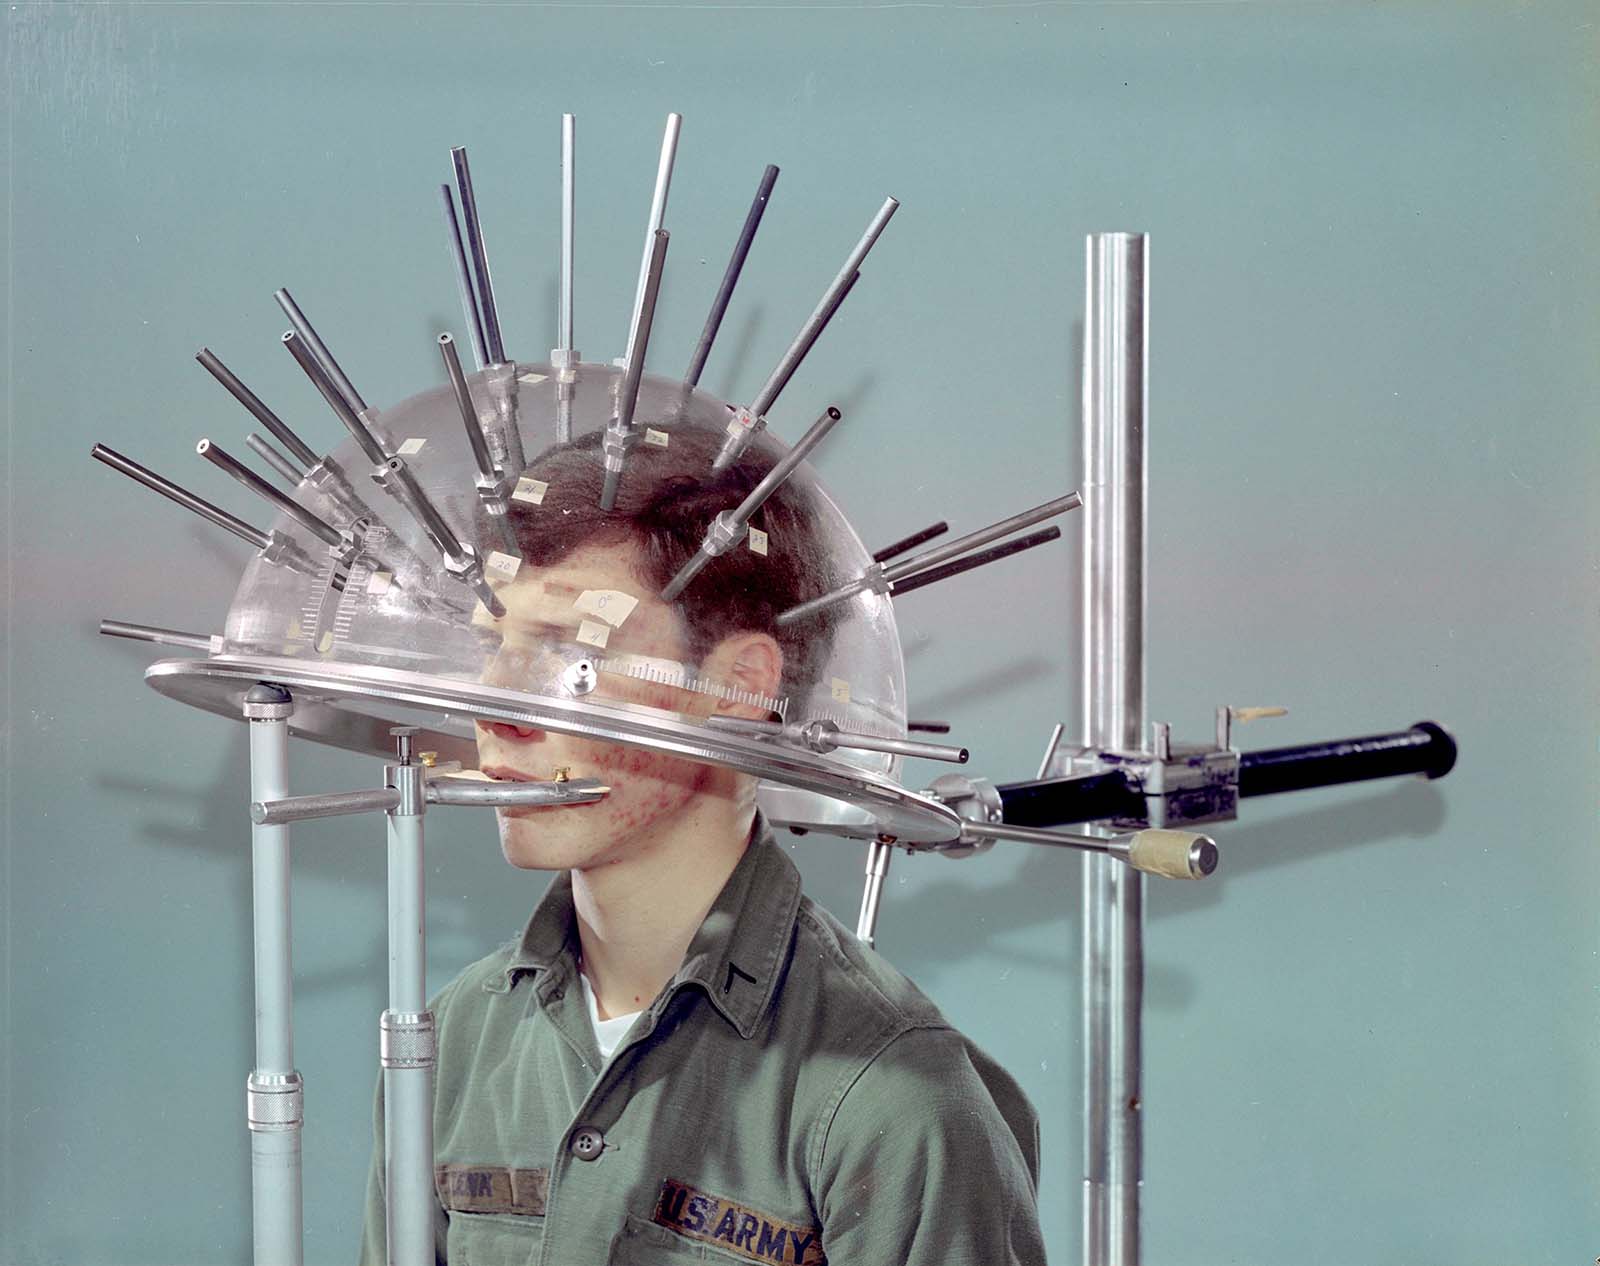 Head measuring device for helmets, 1973.